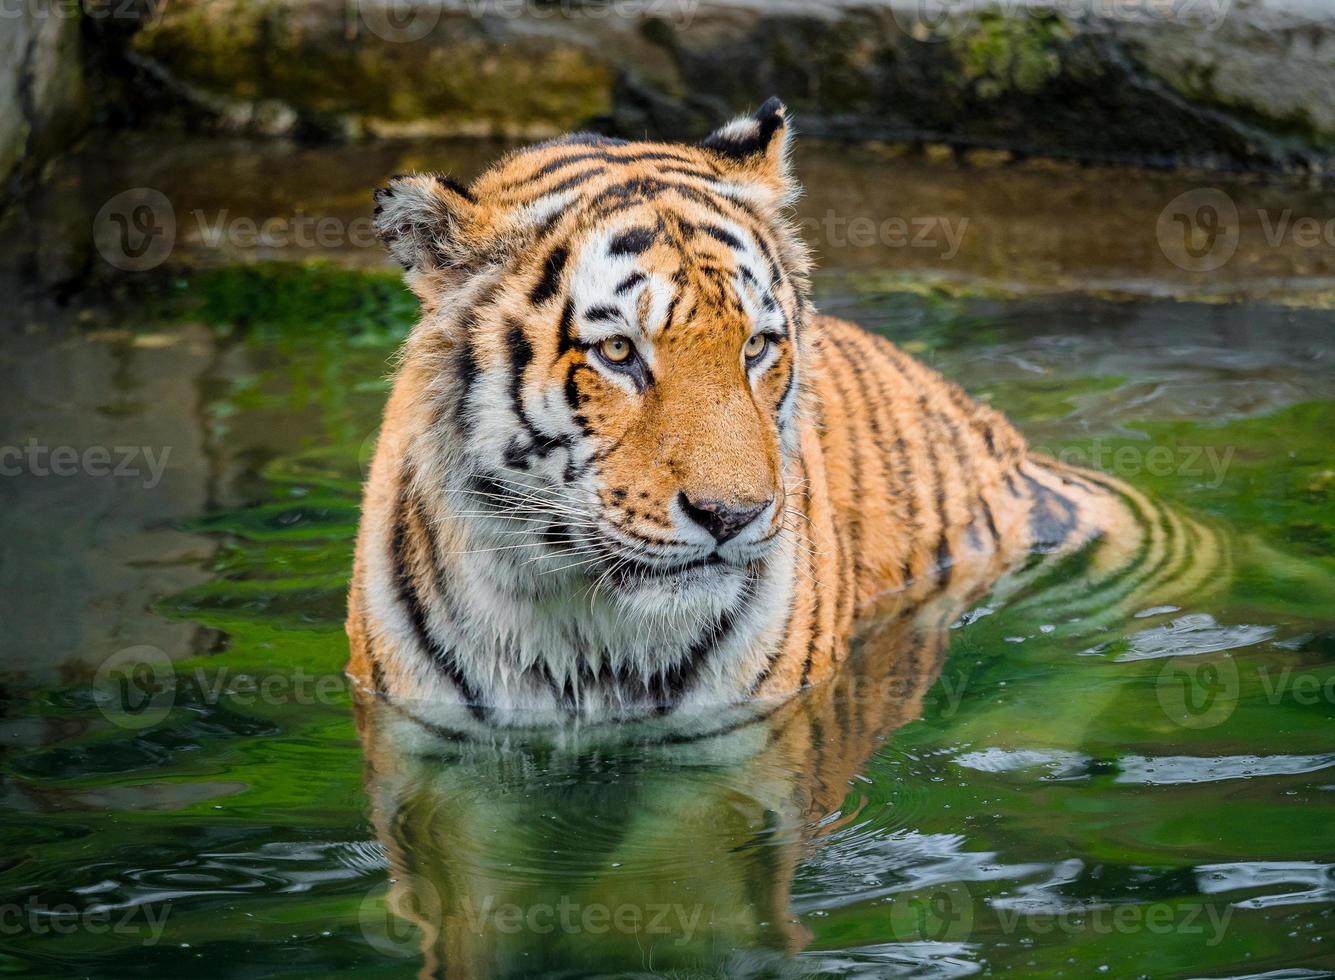 Panthera tigris altaica tigre siberiano en agua, cerrar foto